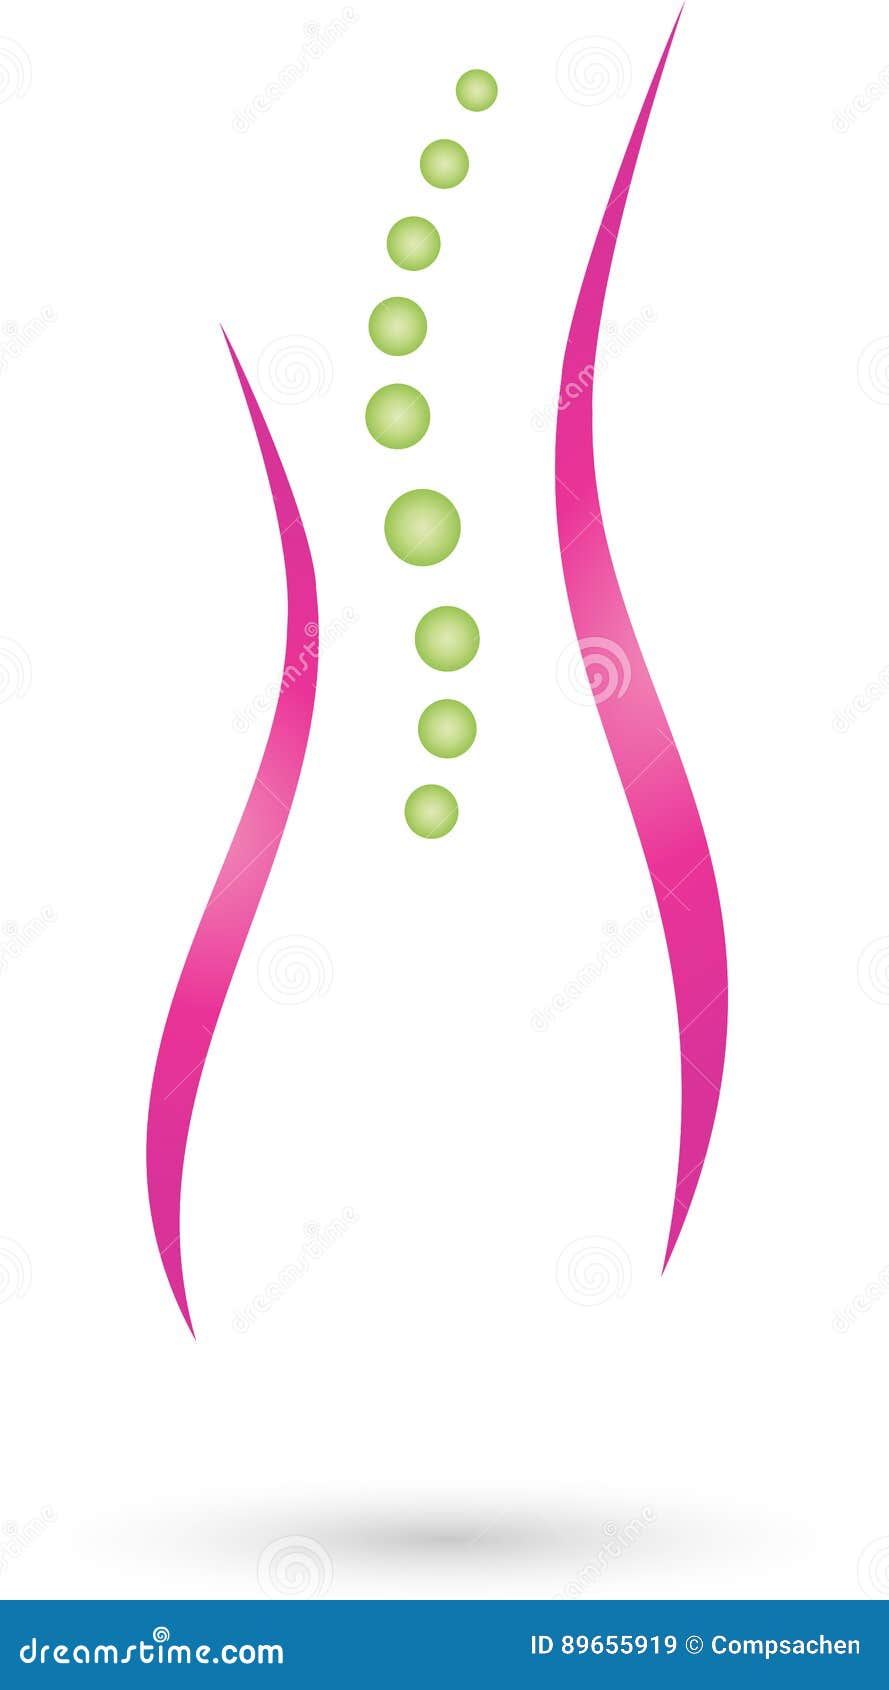 woman, abstract, spine, orthopedics logo